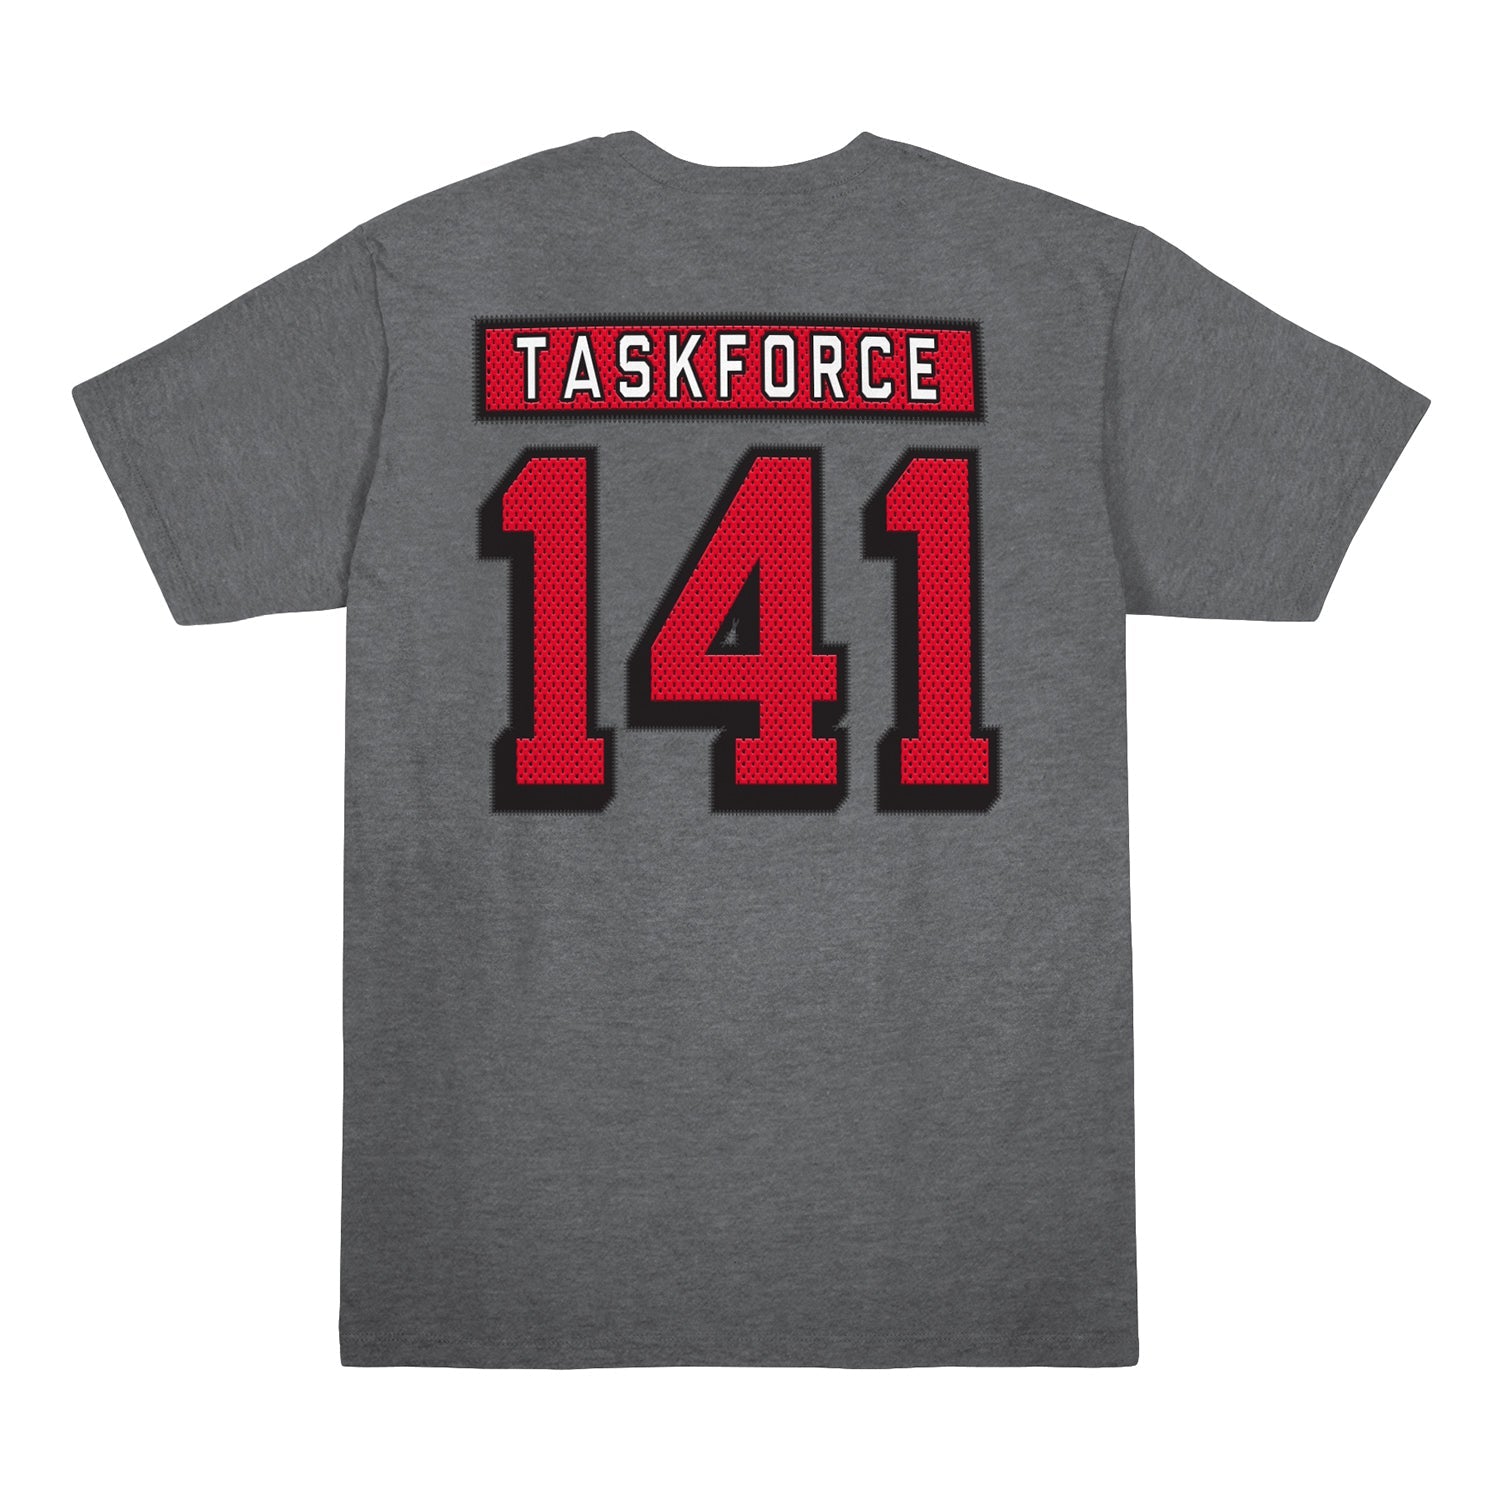 Call of Duty Grey Hockey Taskforce T-Shirt - Back View